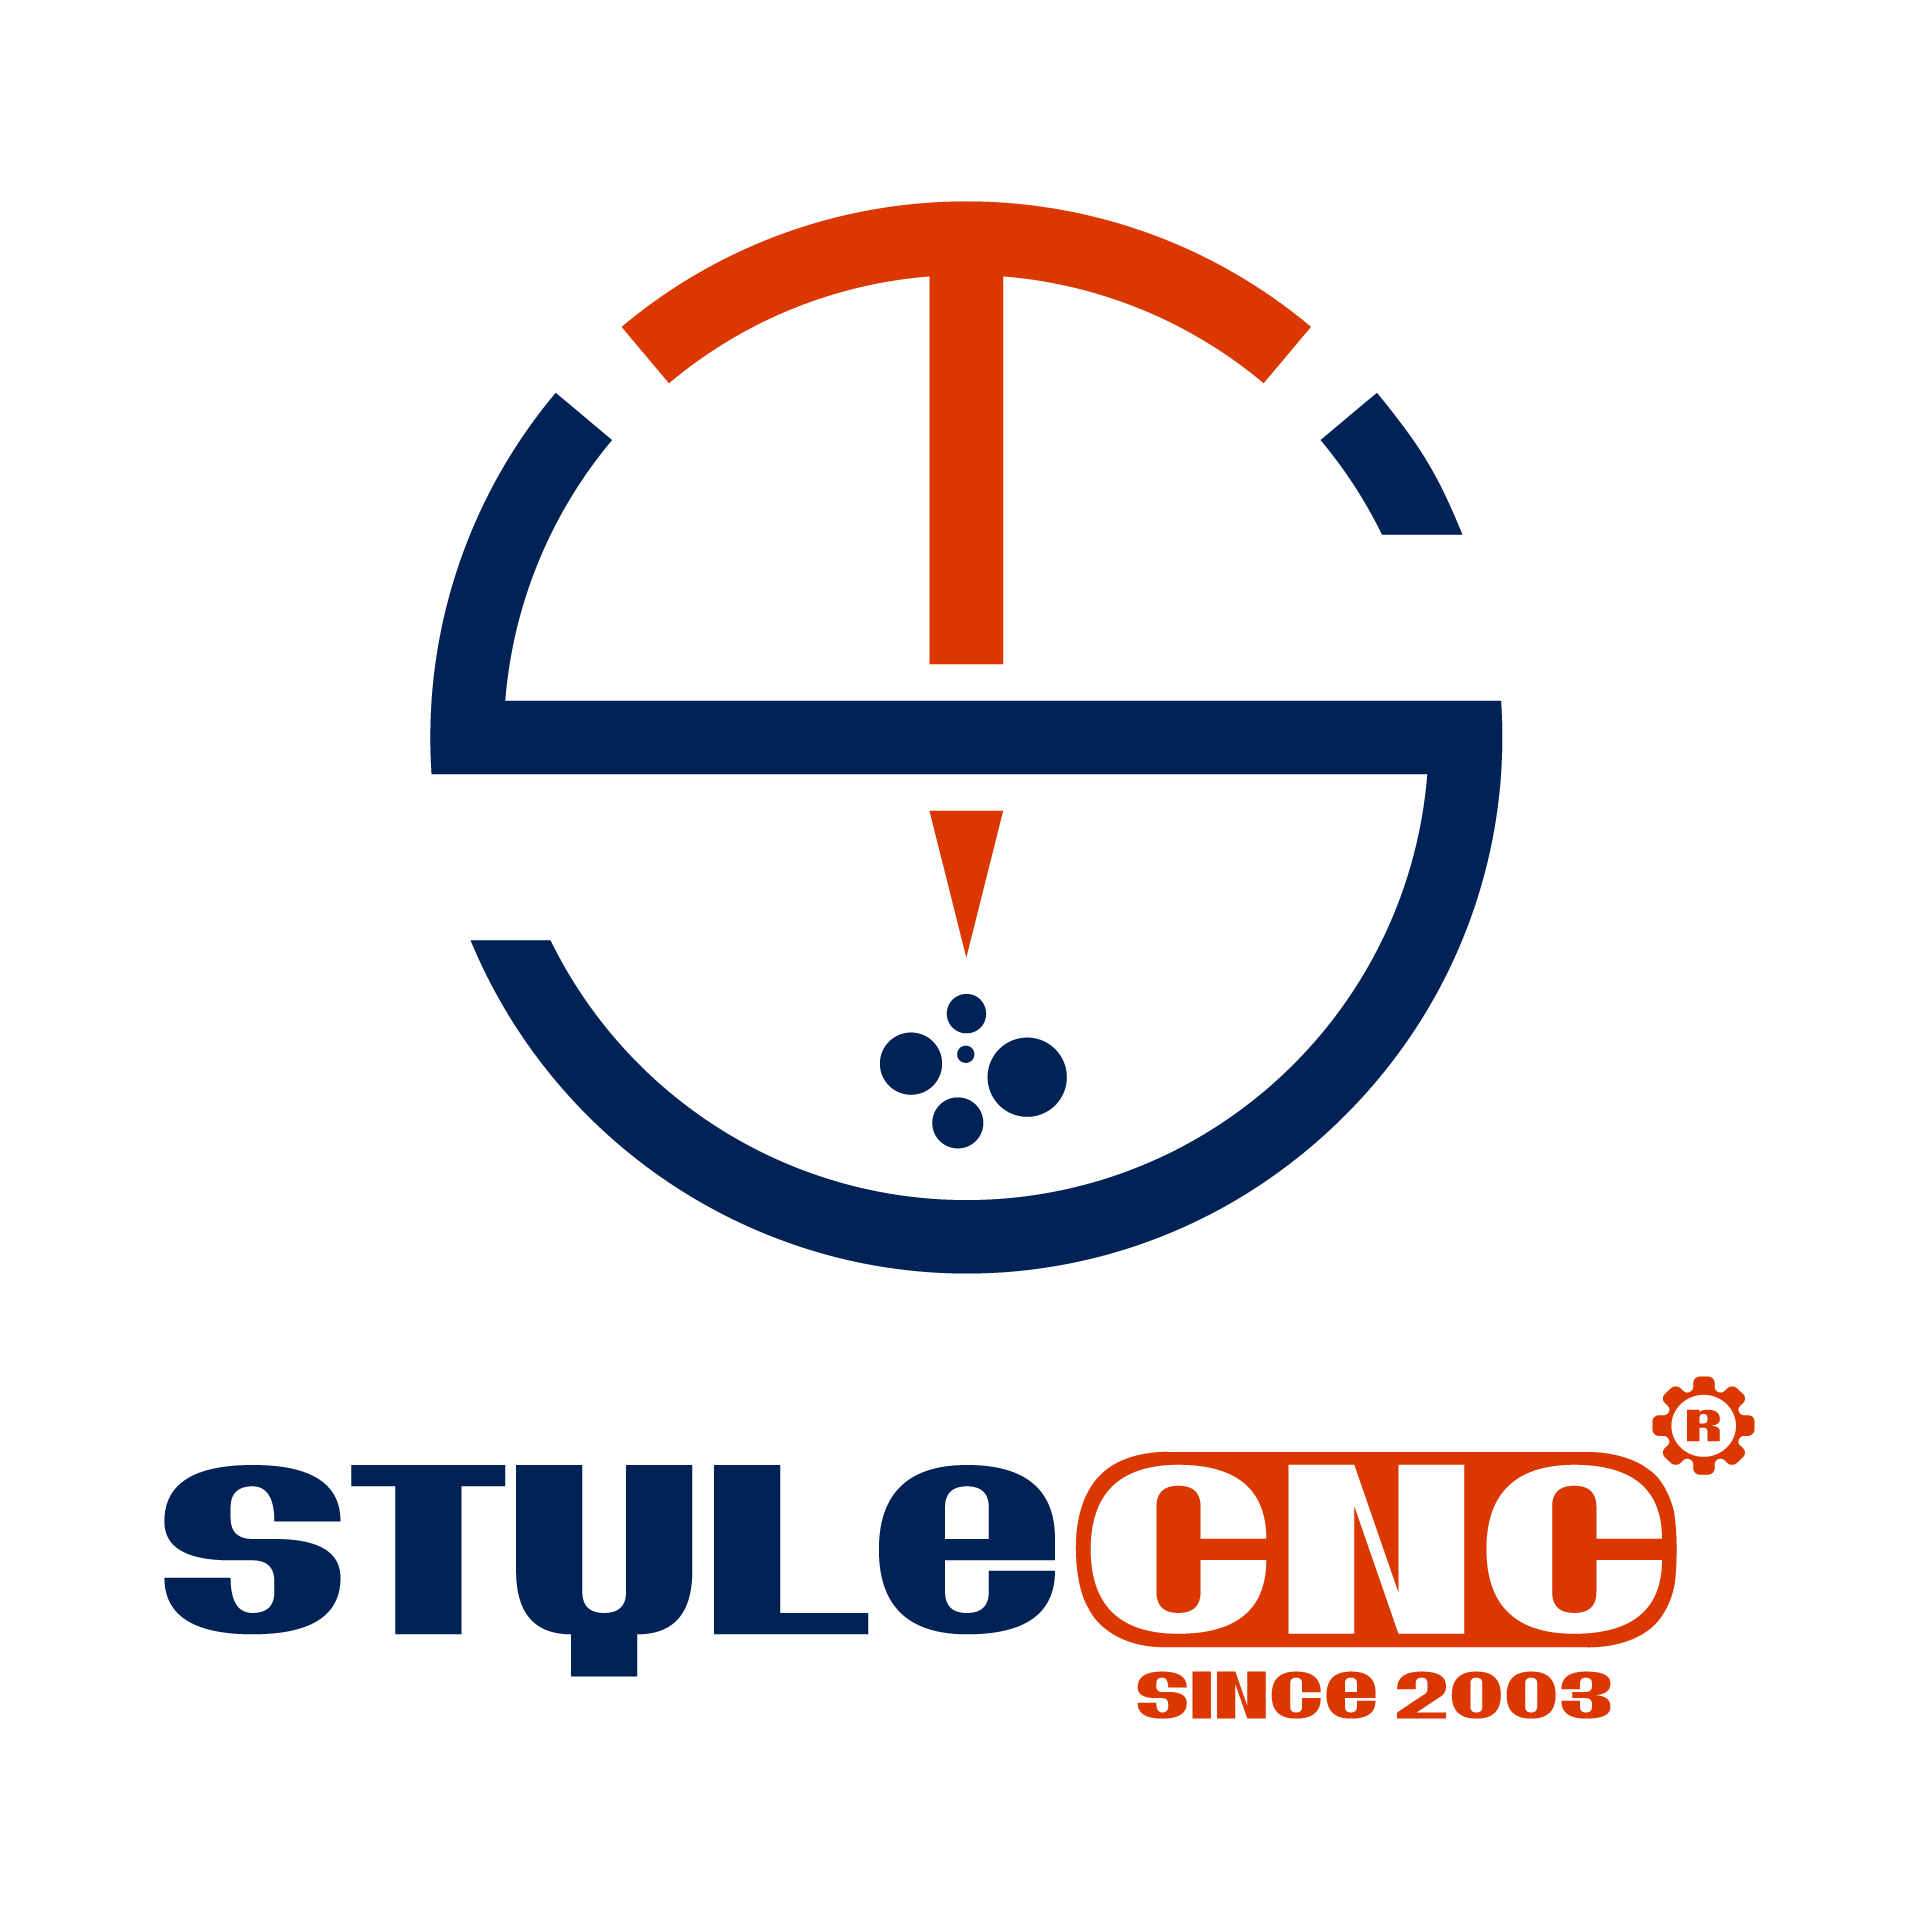 https://www.stylecnc.com/assets/img/logo-square.png